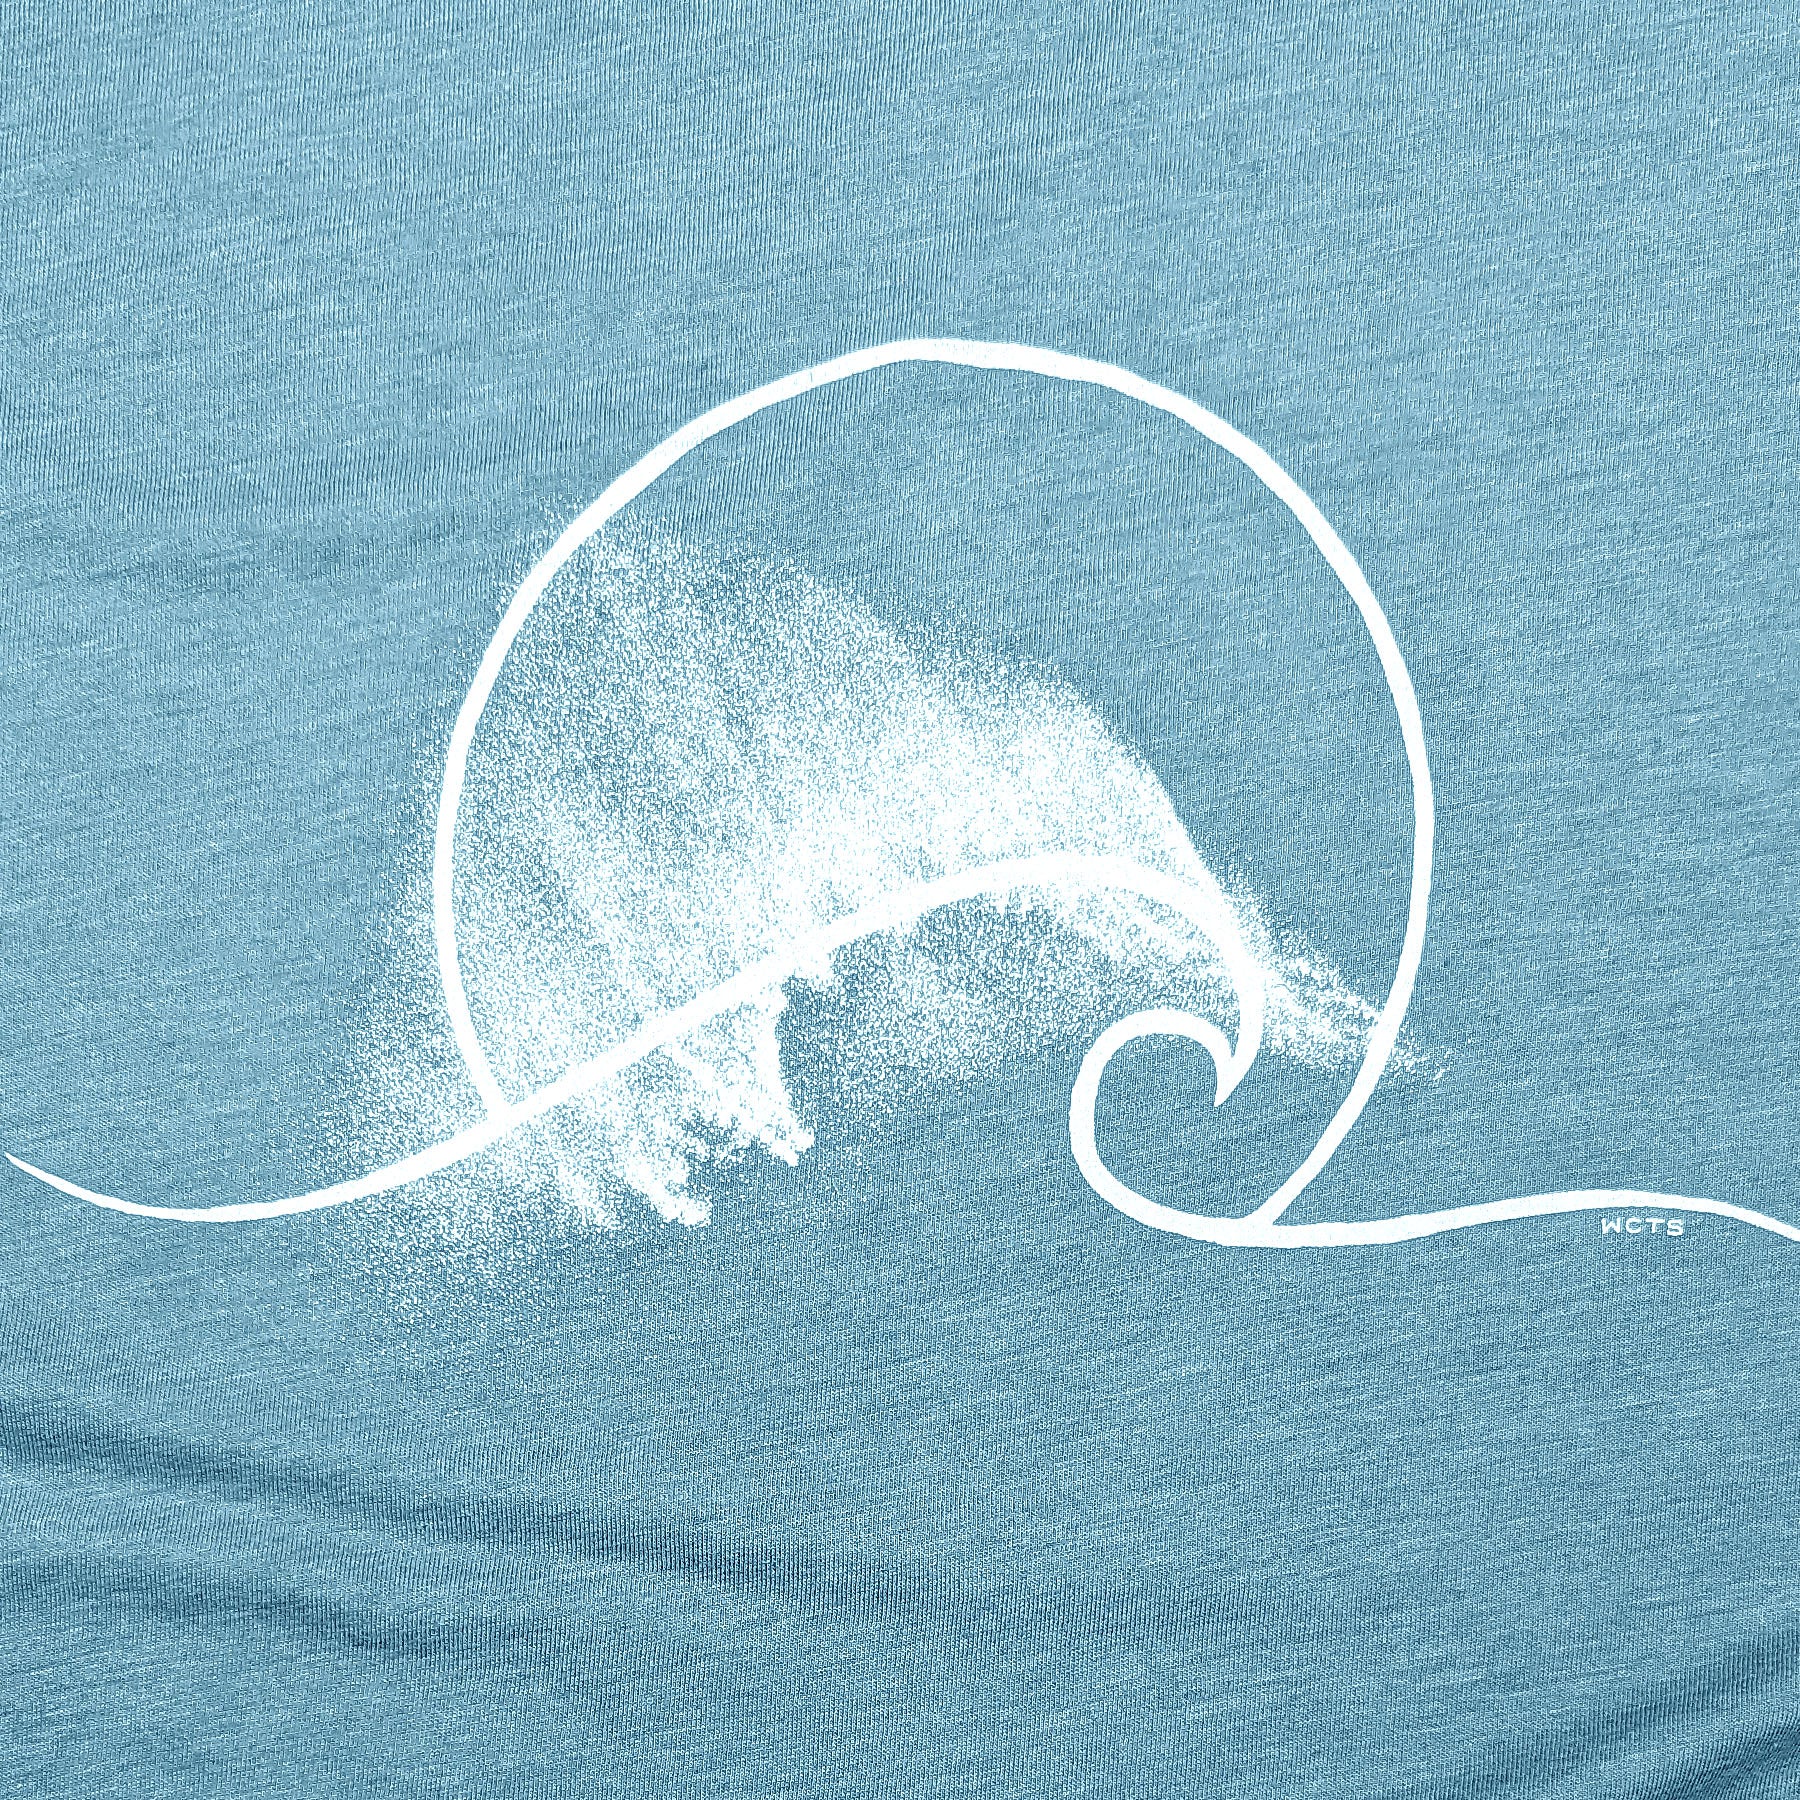 Adult Unisex Ocean Mist T-shirt